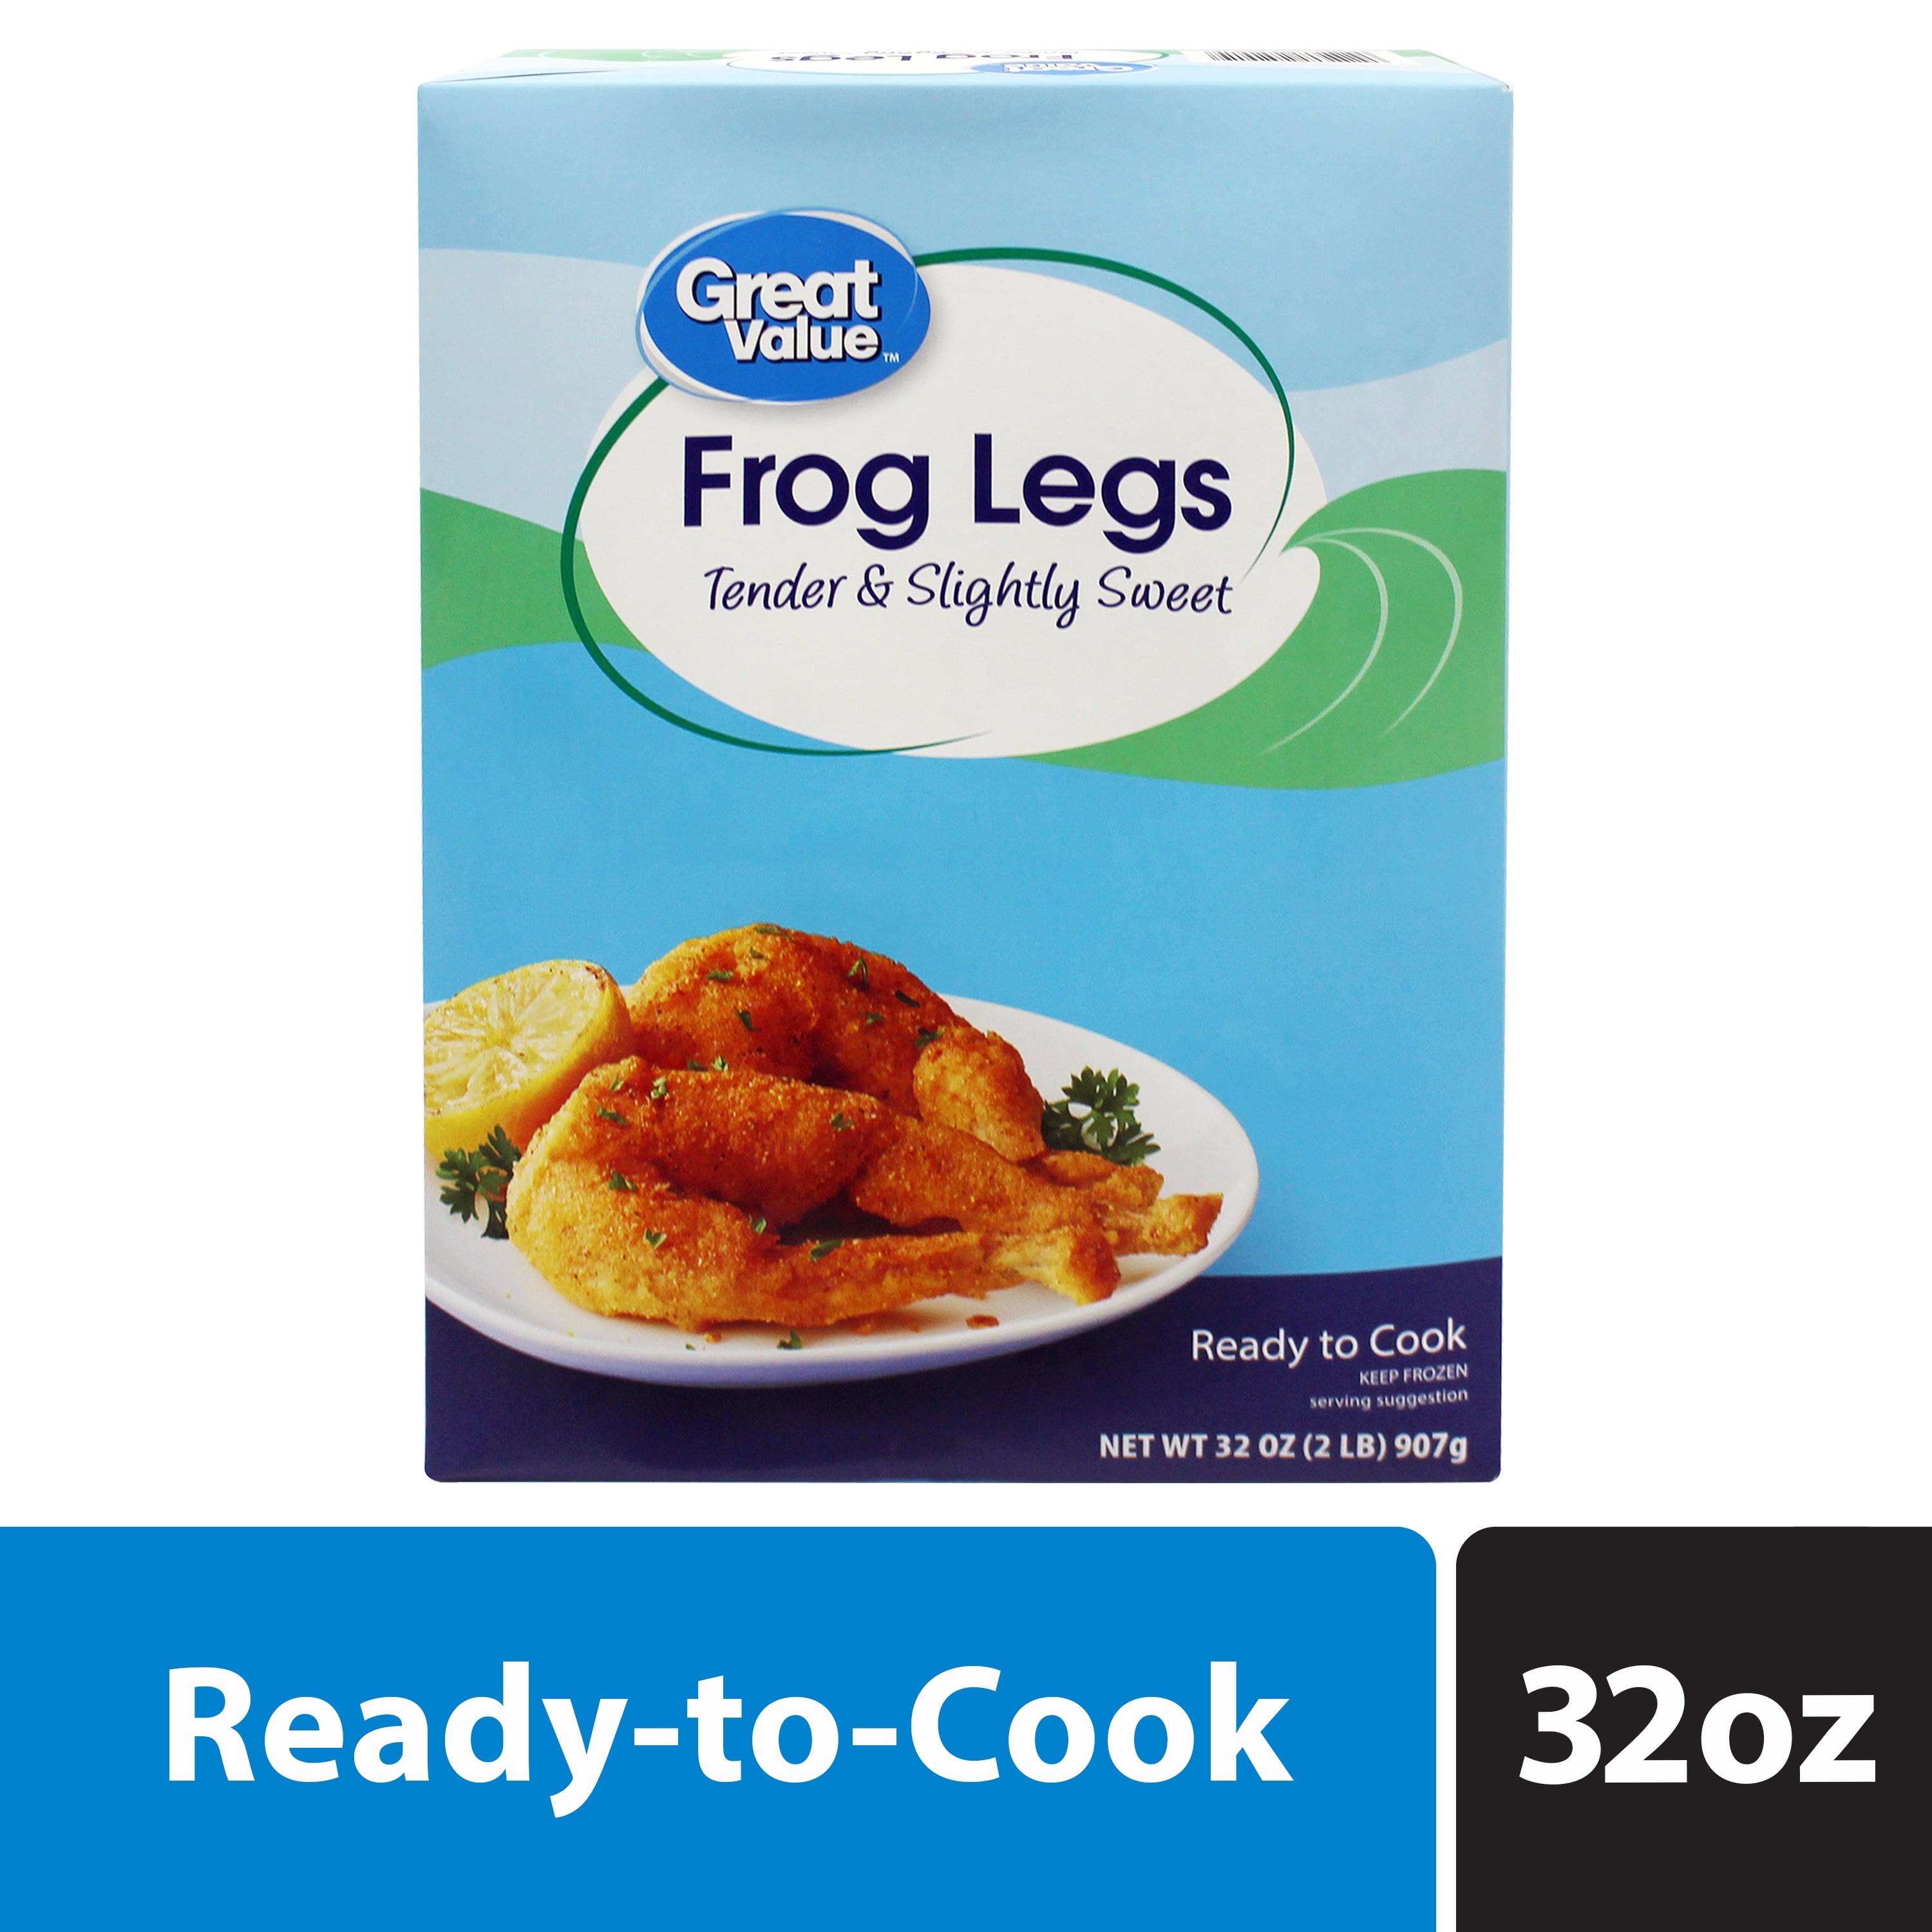 Great Value Frozen Frog Legs, 2 lb